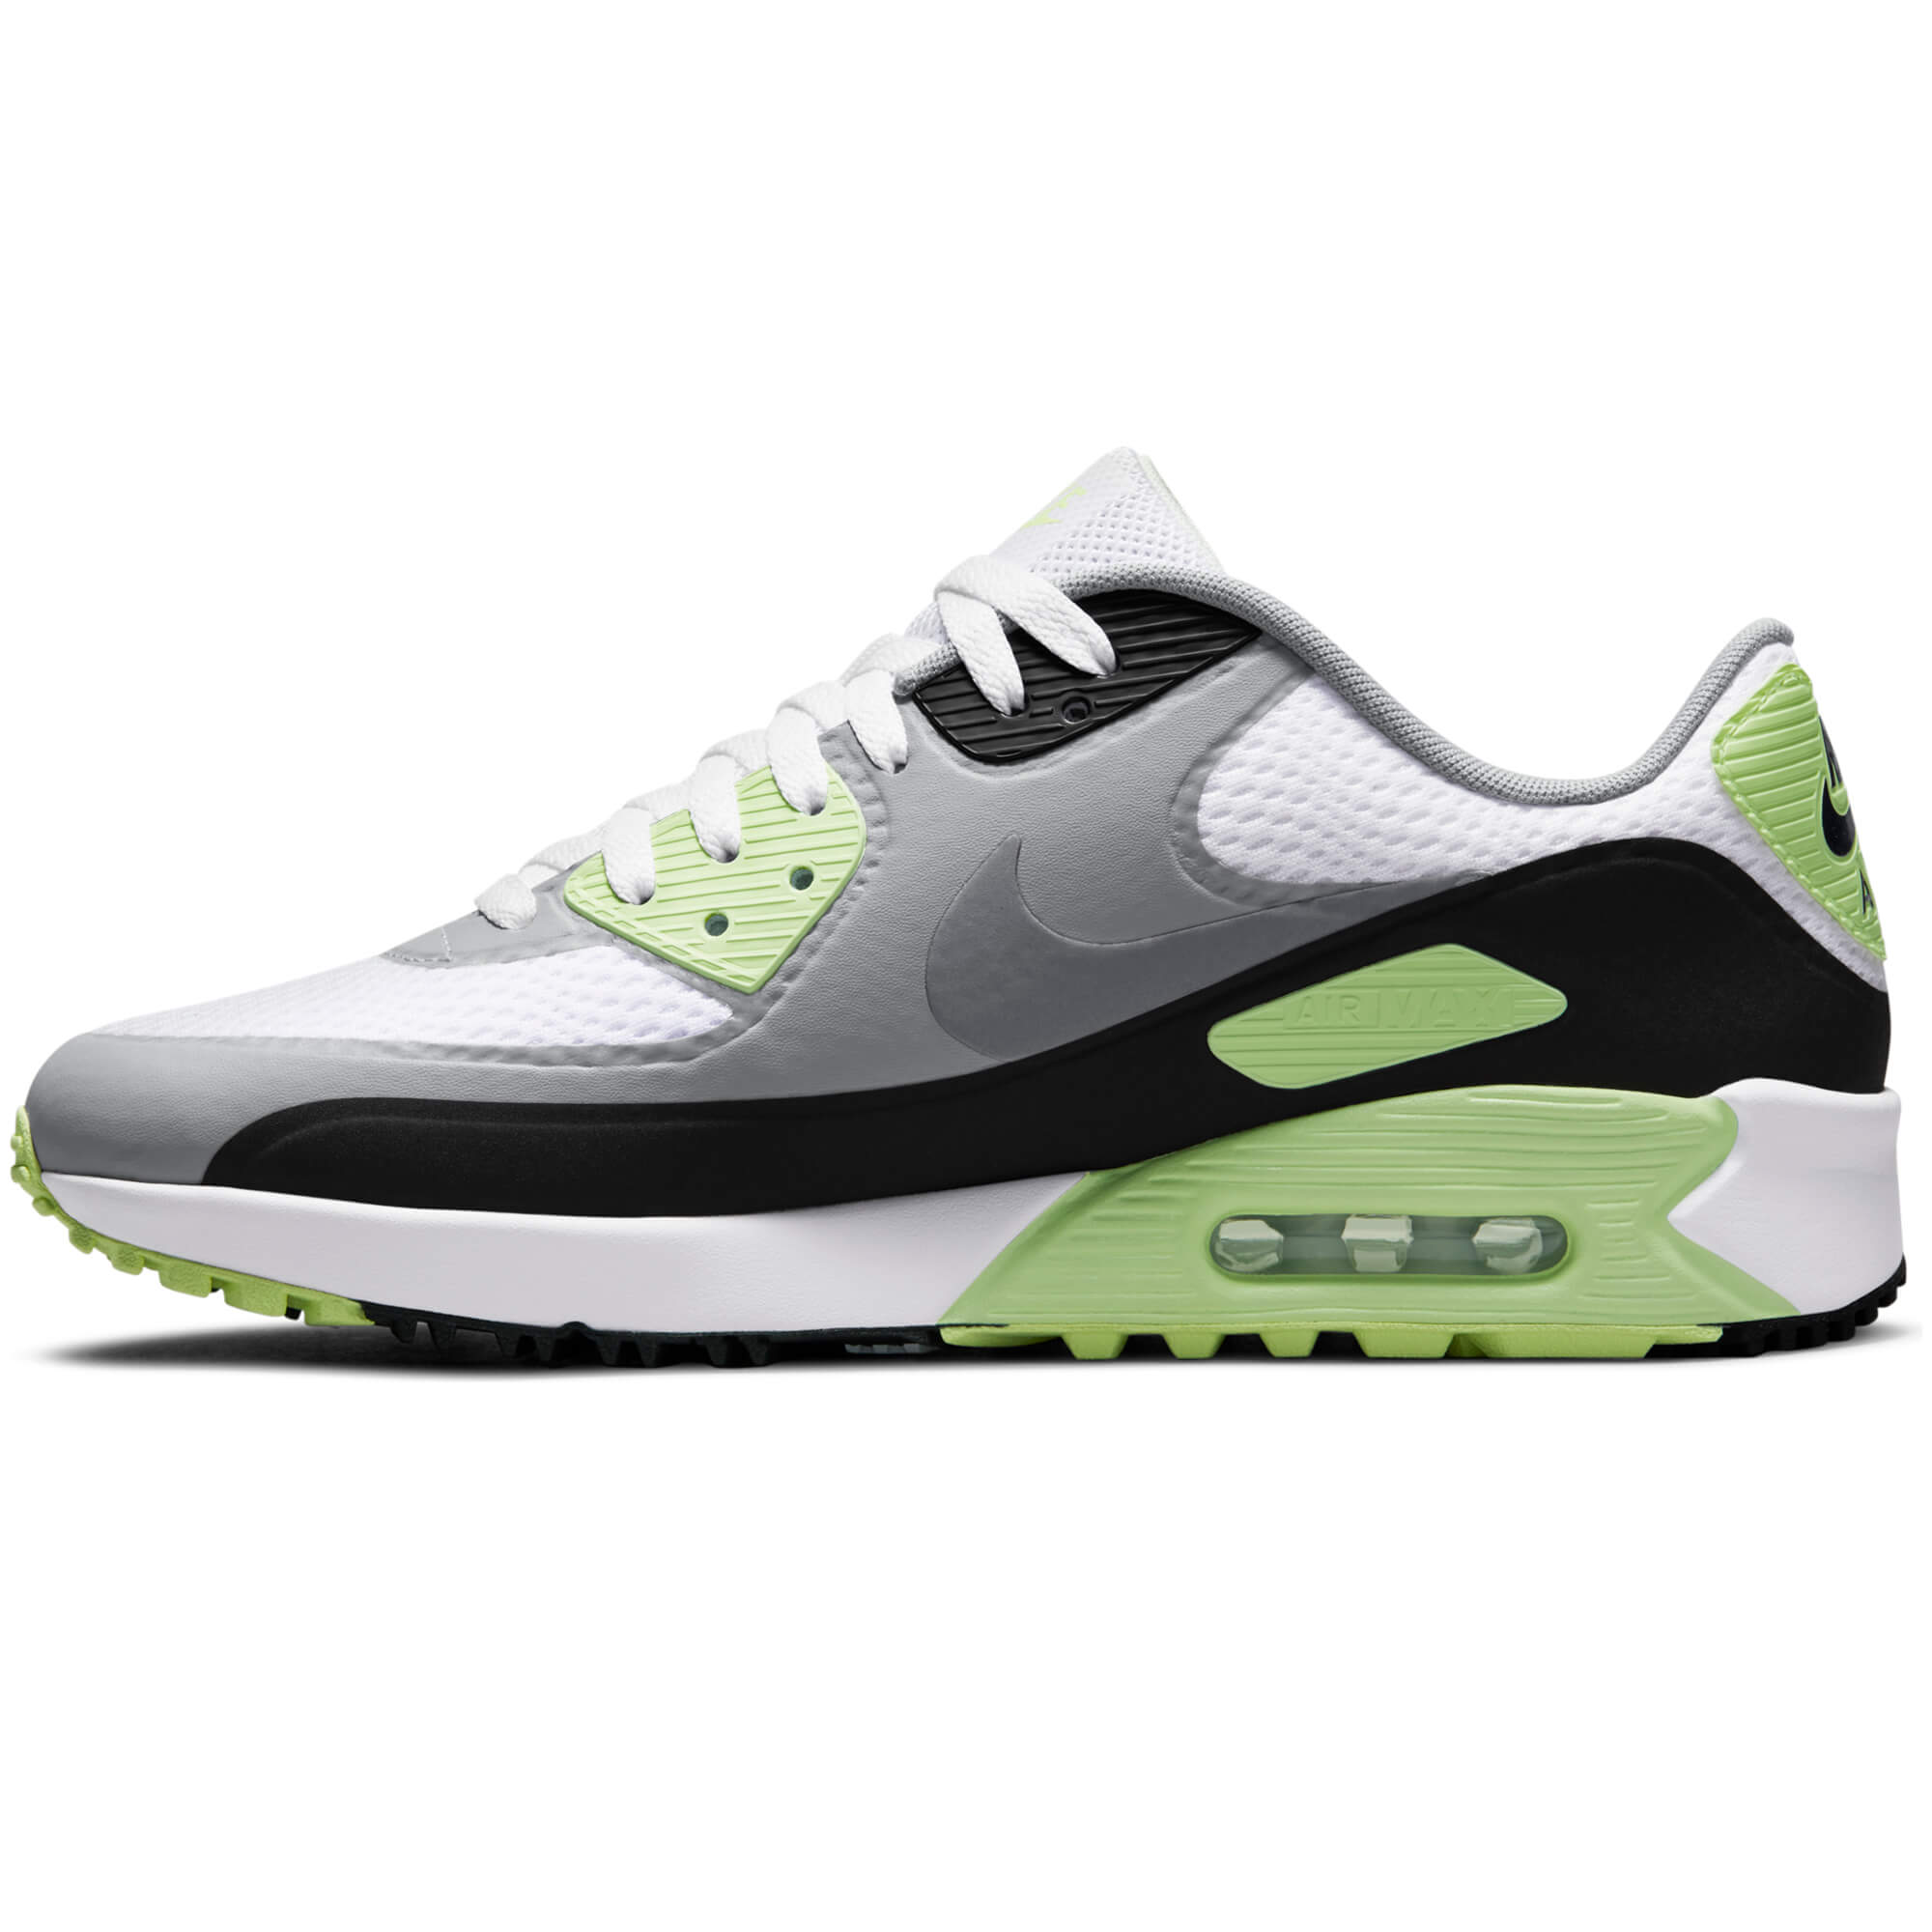 Nike Air Max 90 G Golf Shoes White/Black/Flash Lime | Scottsdale Golf